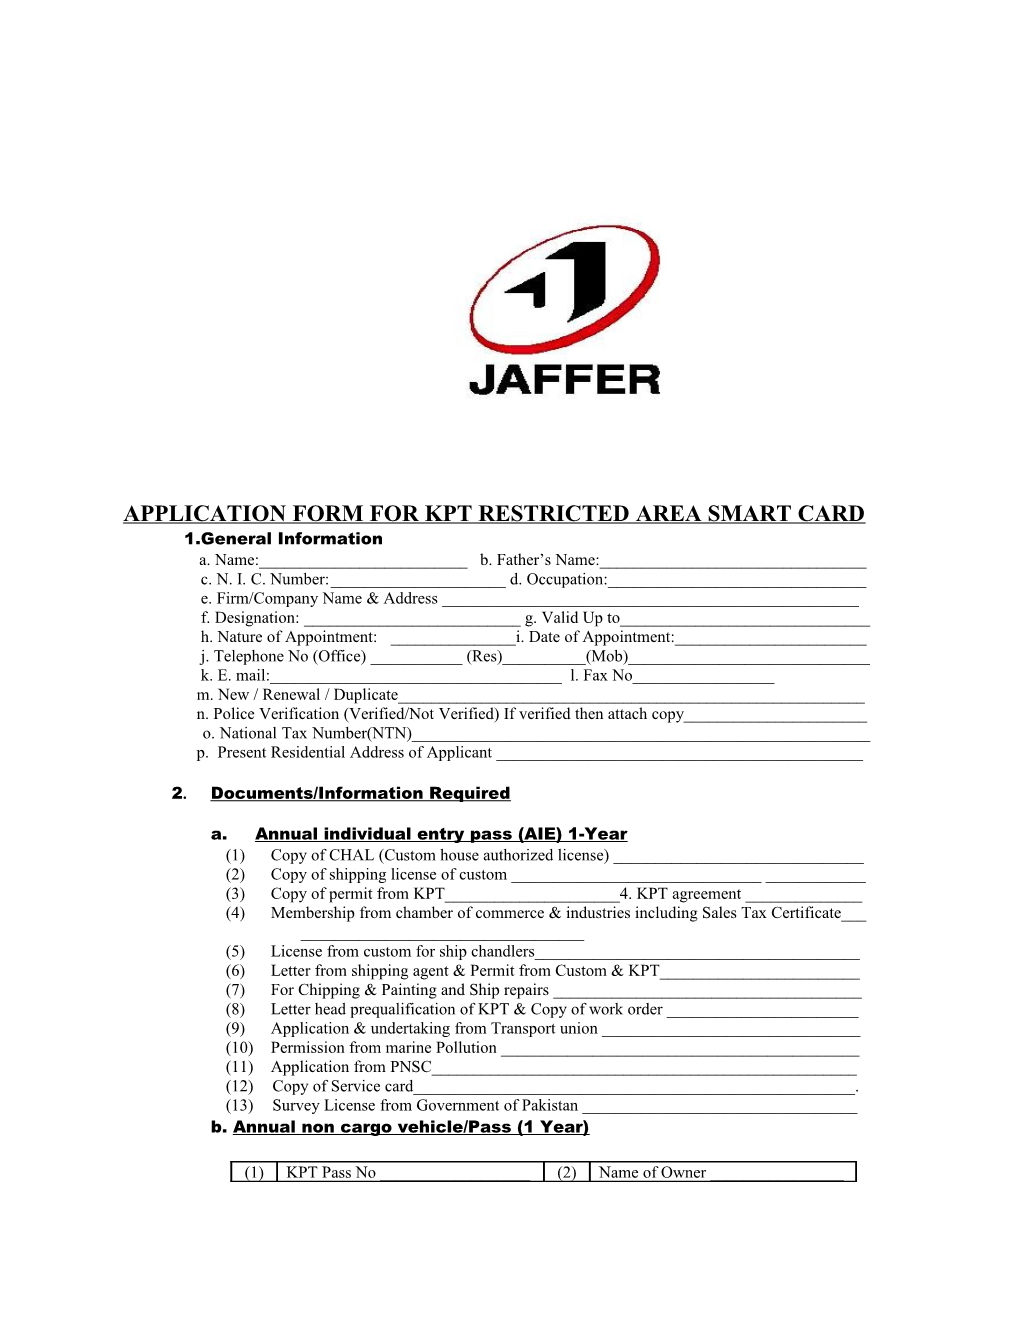 Application Form for Kpt Restricted Area Smart Card